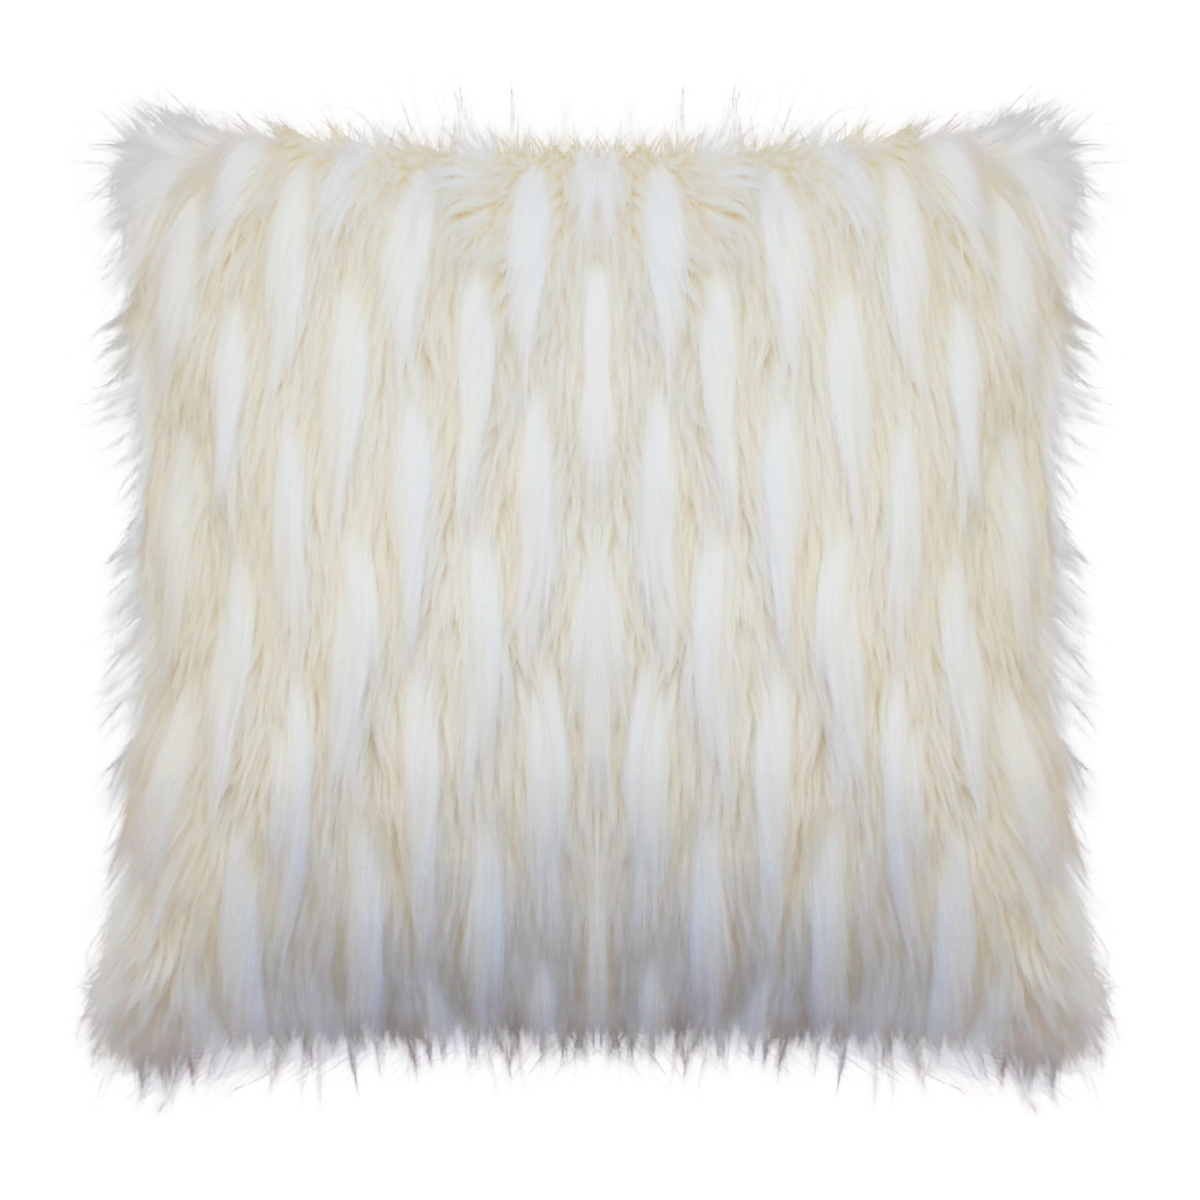 Sq-at-ostwh-5060 50 X 60 In. Faux Fur Throw Blanket - Ostrich